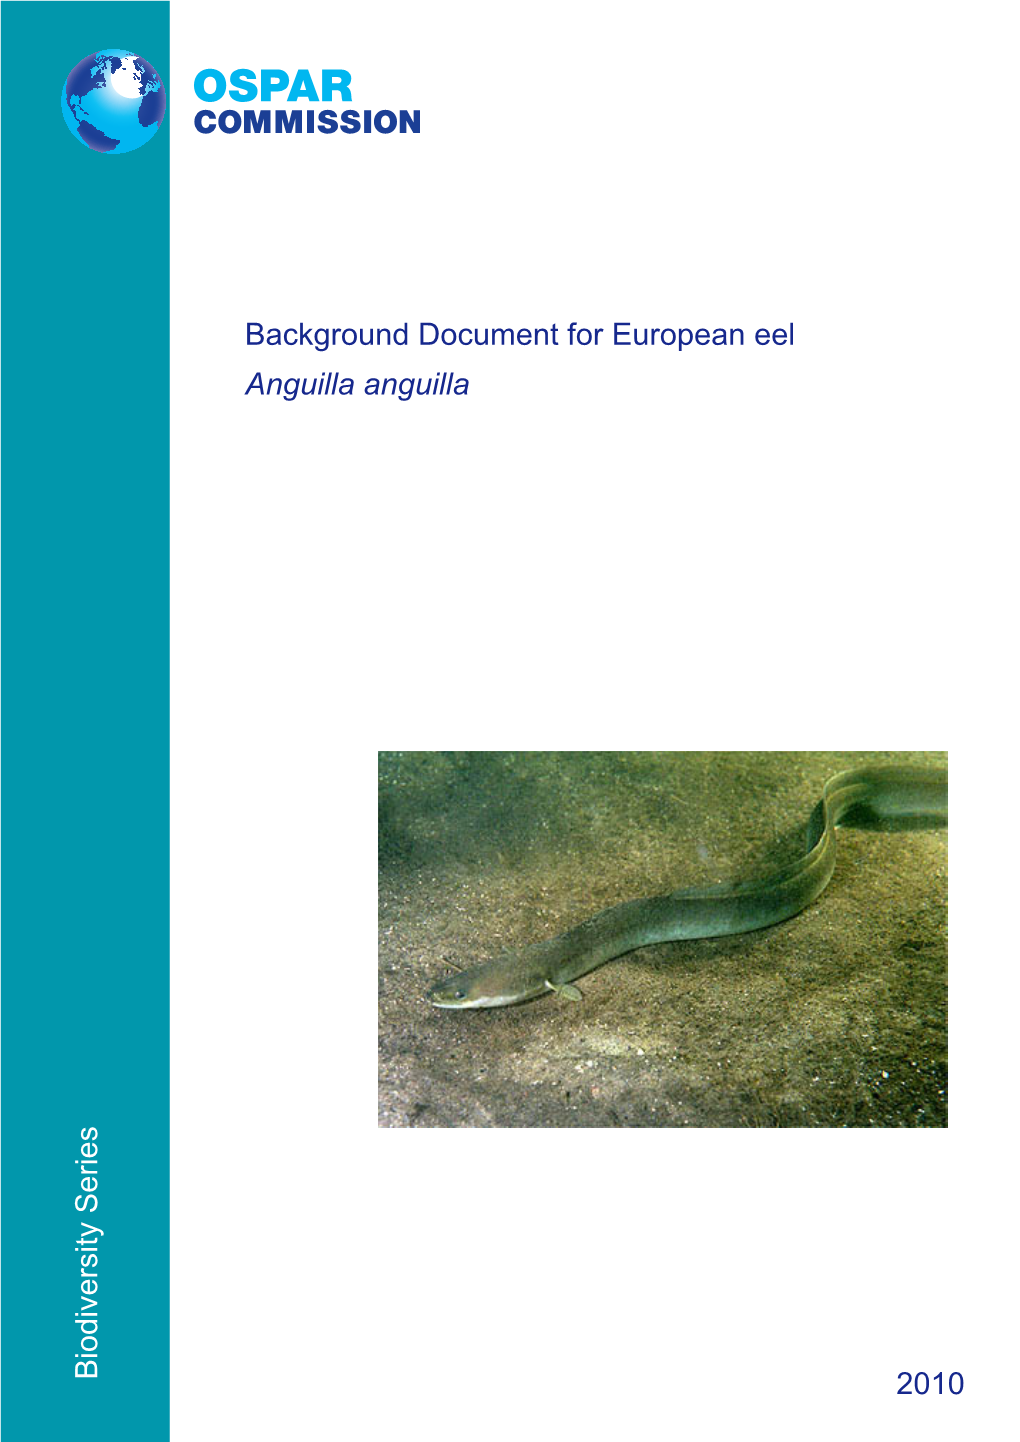 Biodiversity Series Background Document for European Eel